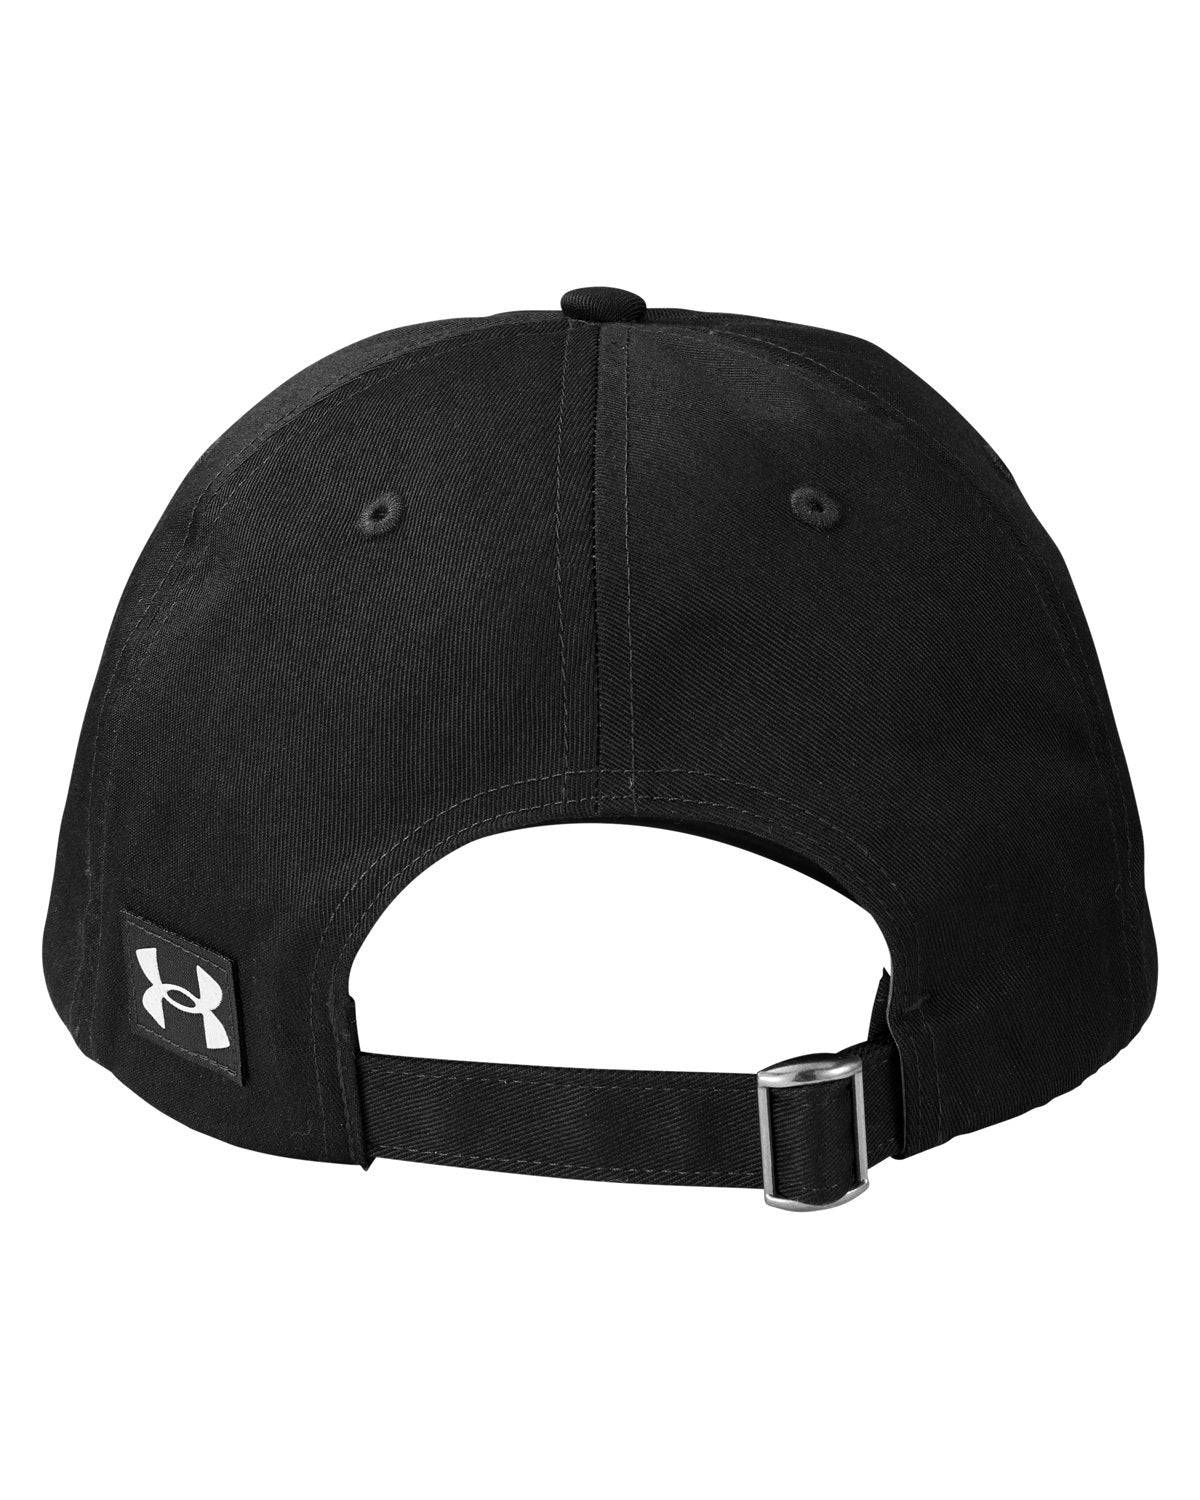 Under Armour Chino Custom Hats, Black